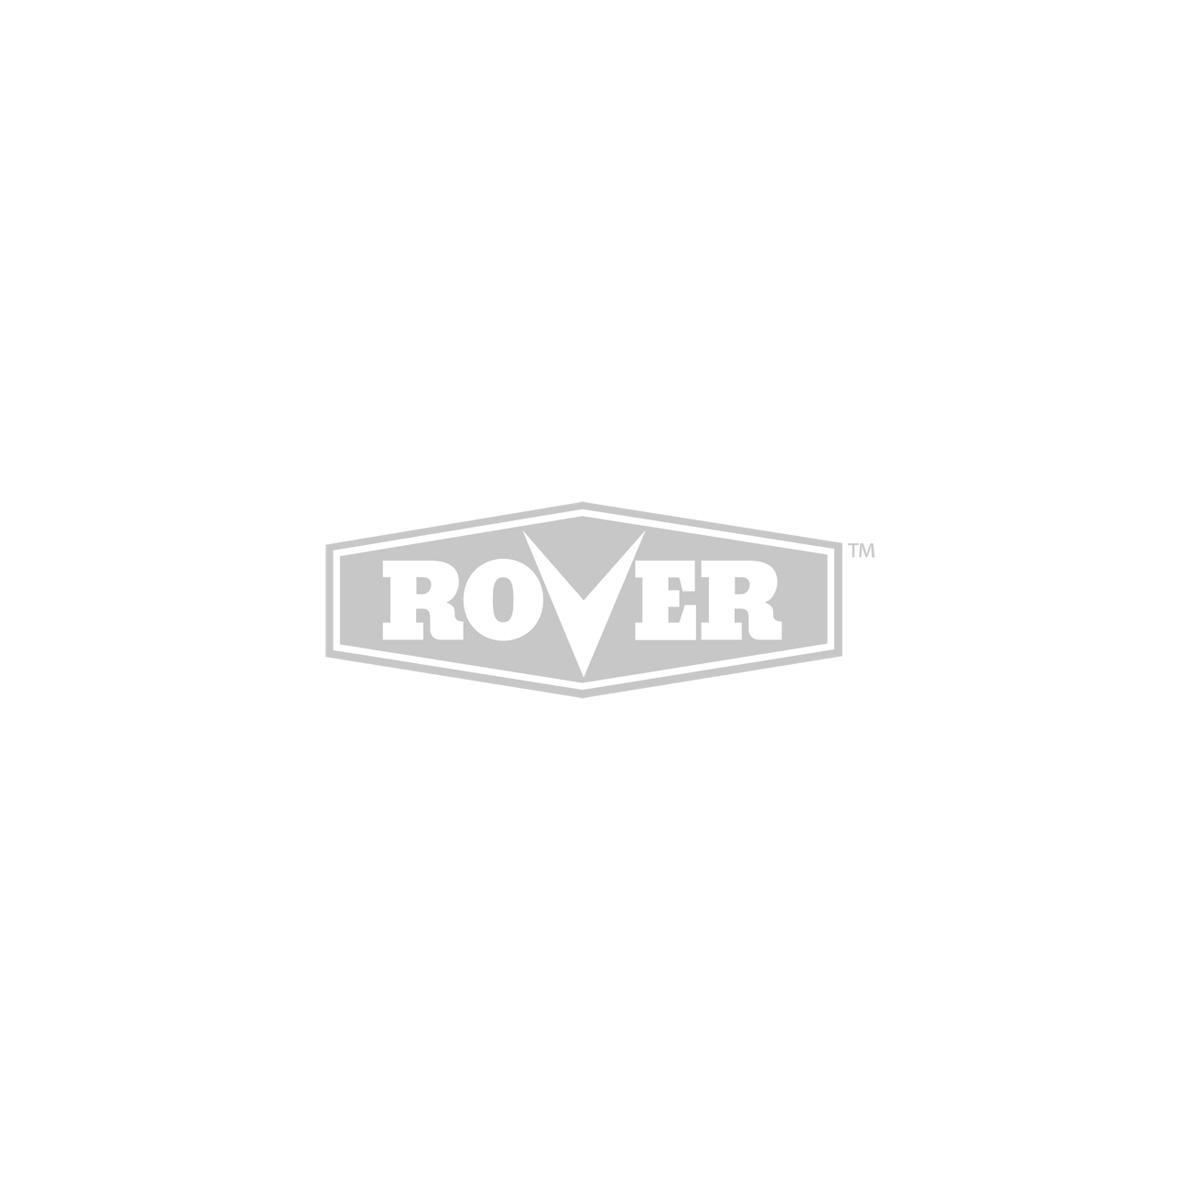 Rover 1 Litre Chain & Bar ISO 150 Oil